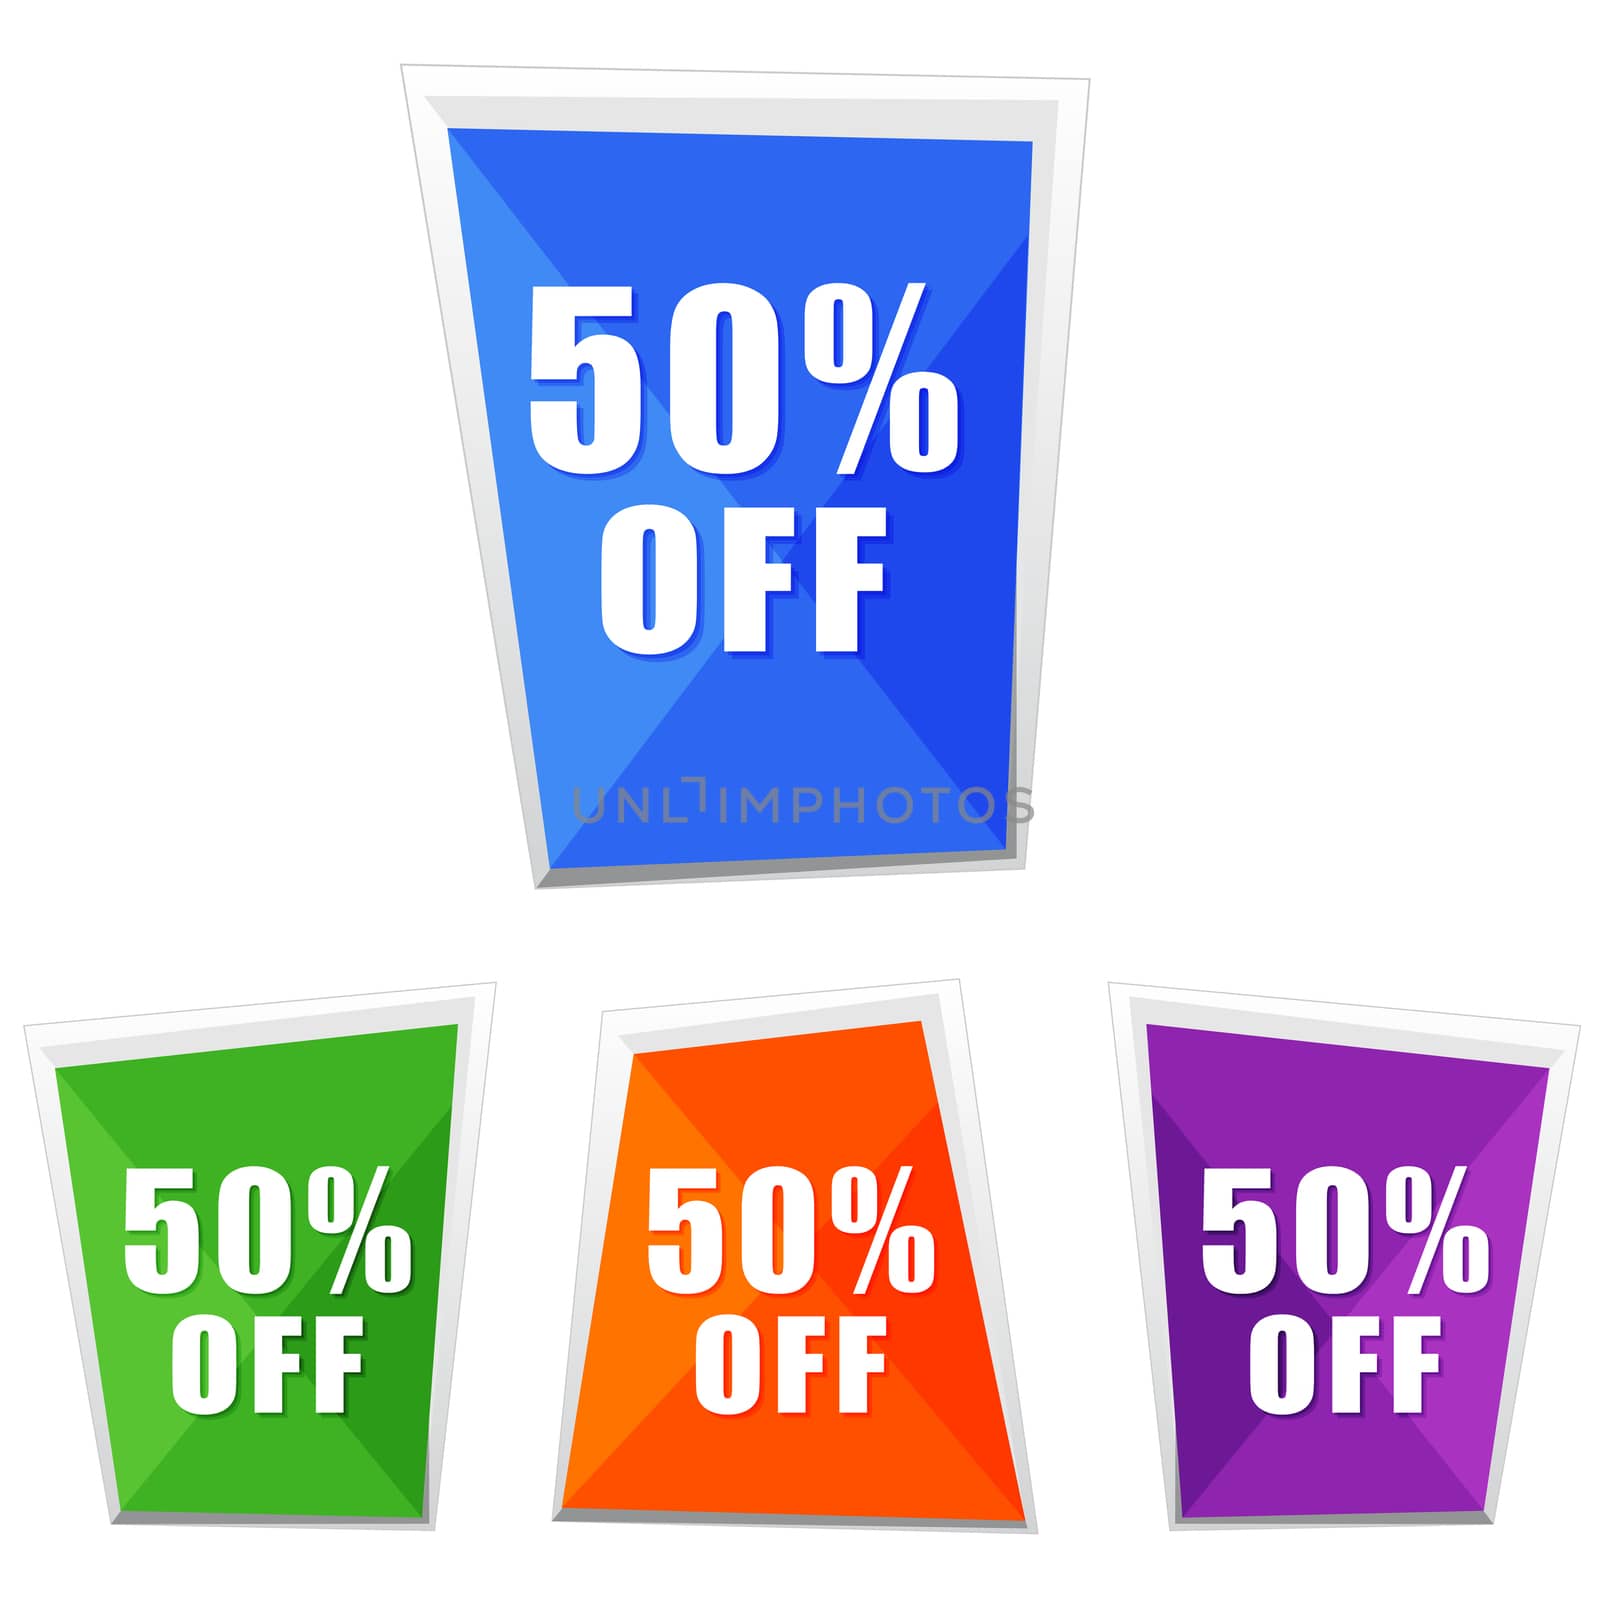 50 percentages off, four colors labels, flat design, business shopping concept